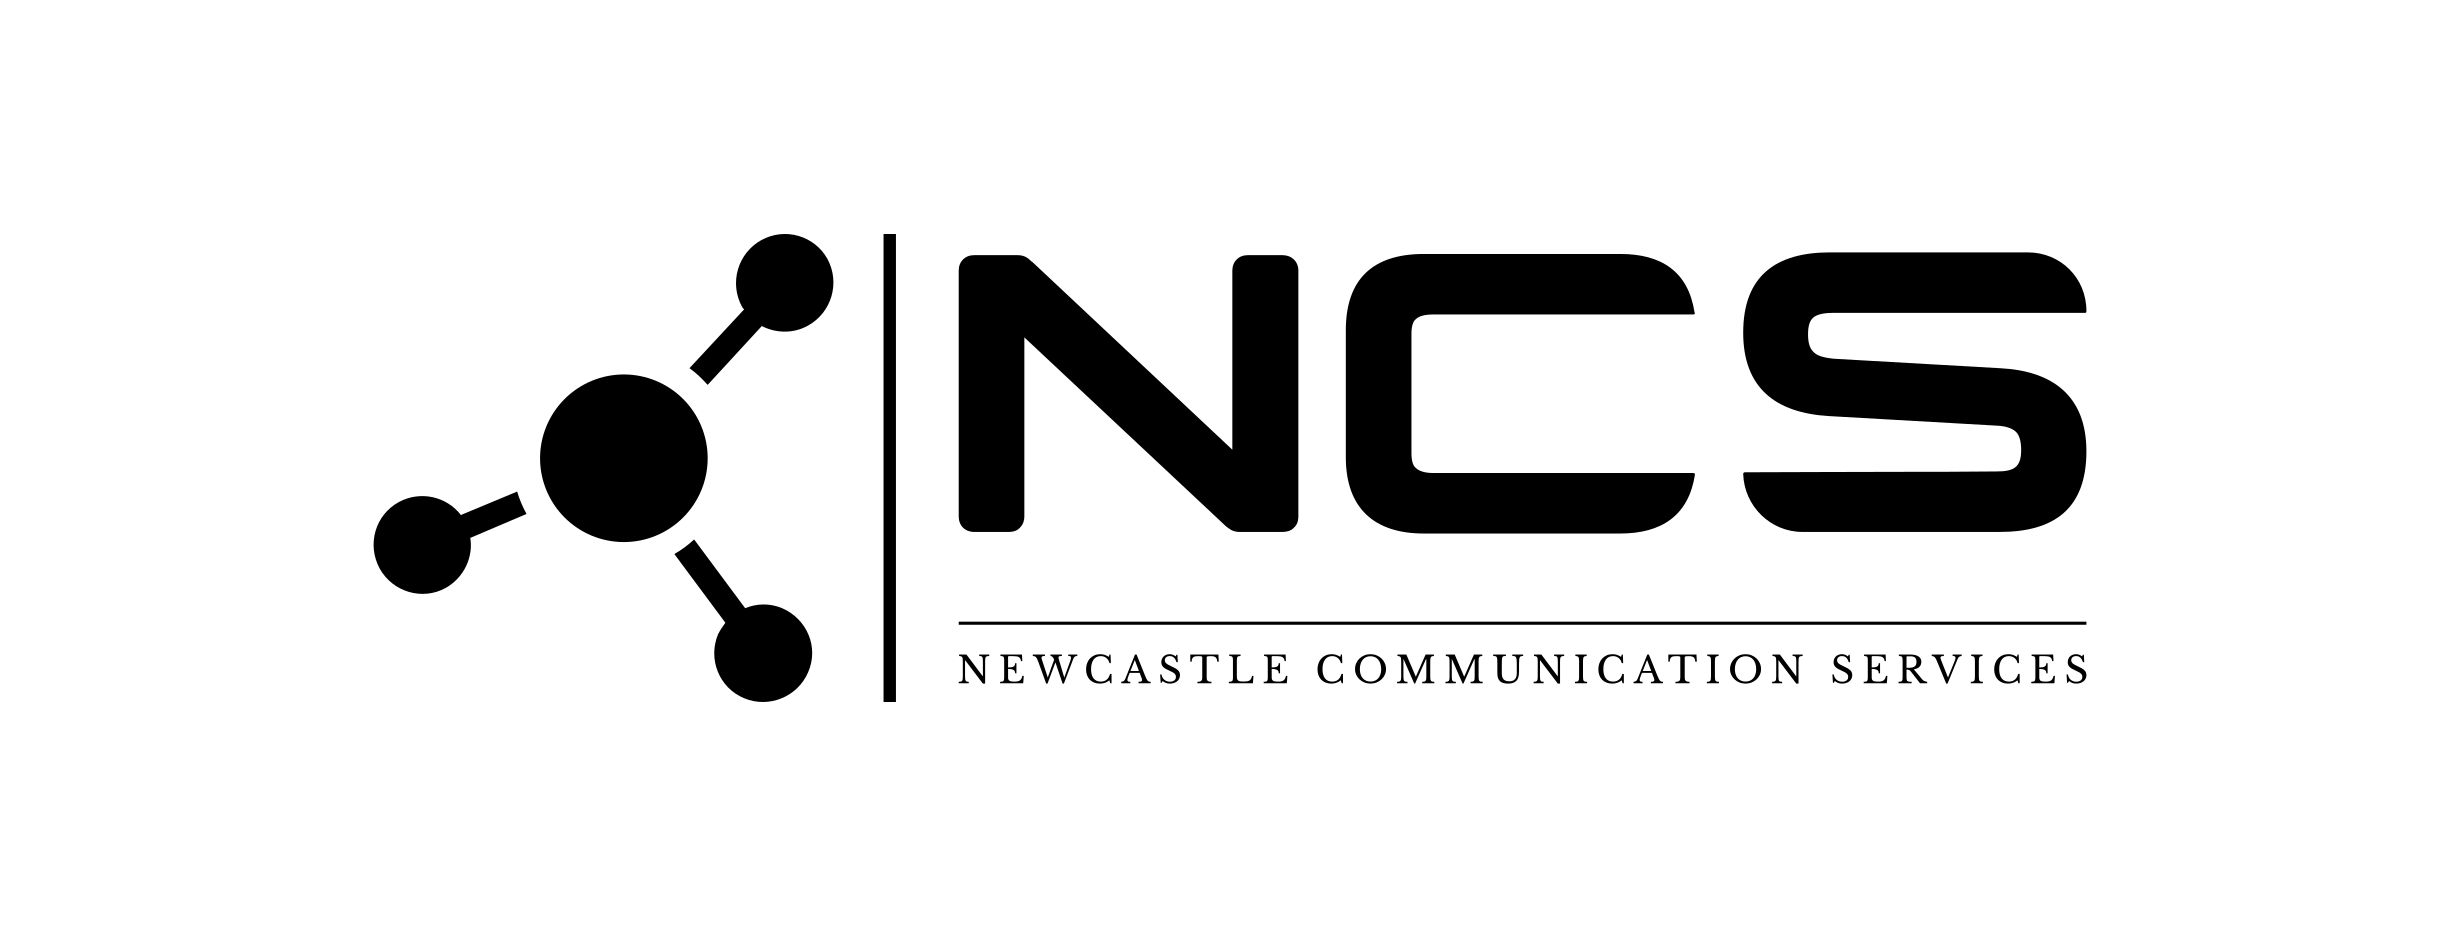 Newcastle Communication Services